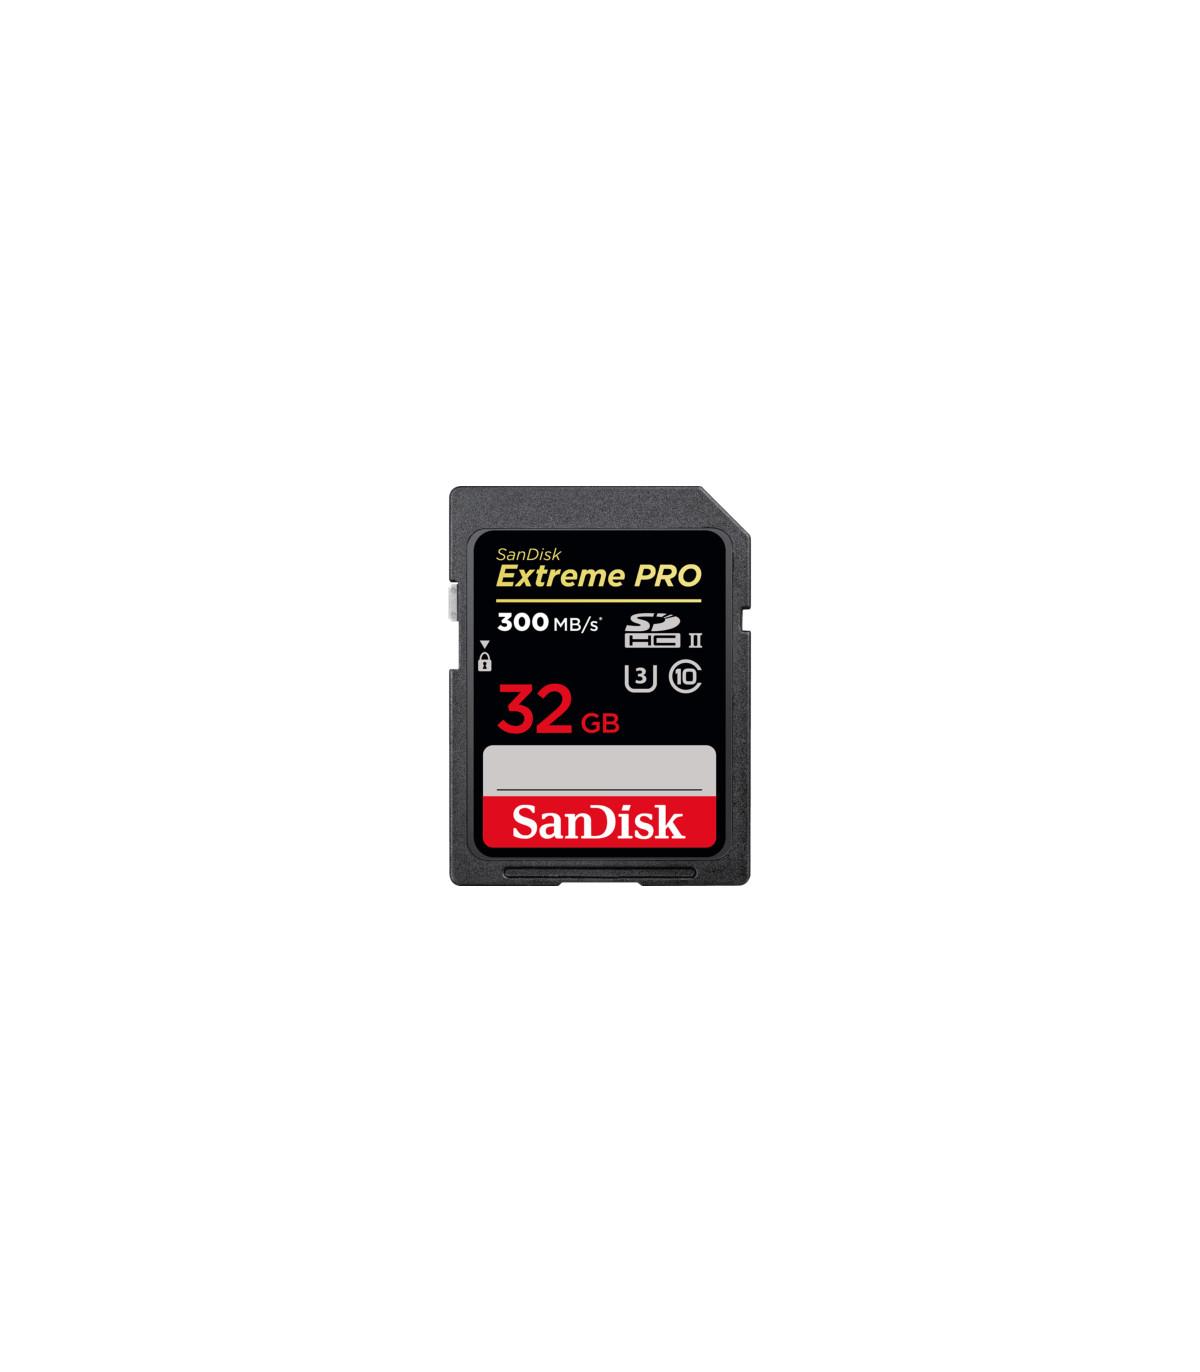 Sandisk carte SDHC Extreme Pro (300MB/s) 32GO - Prophot